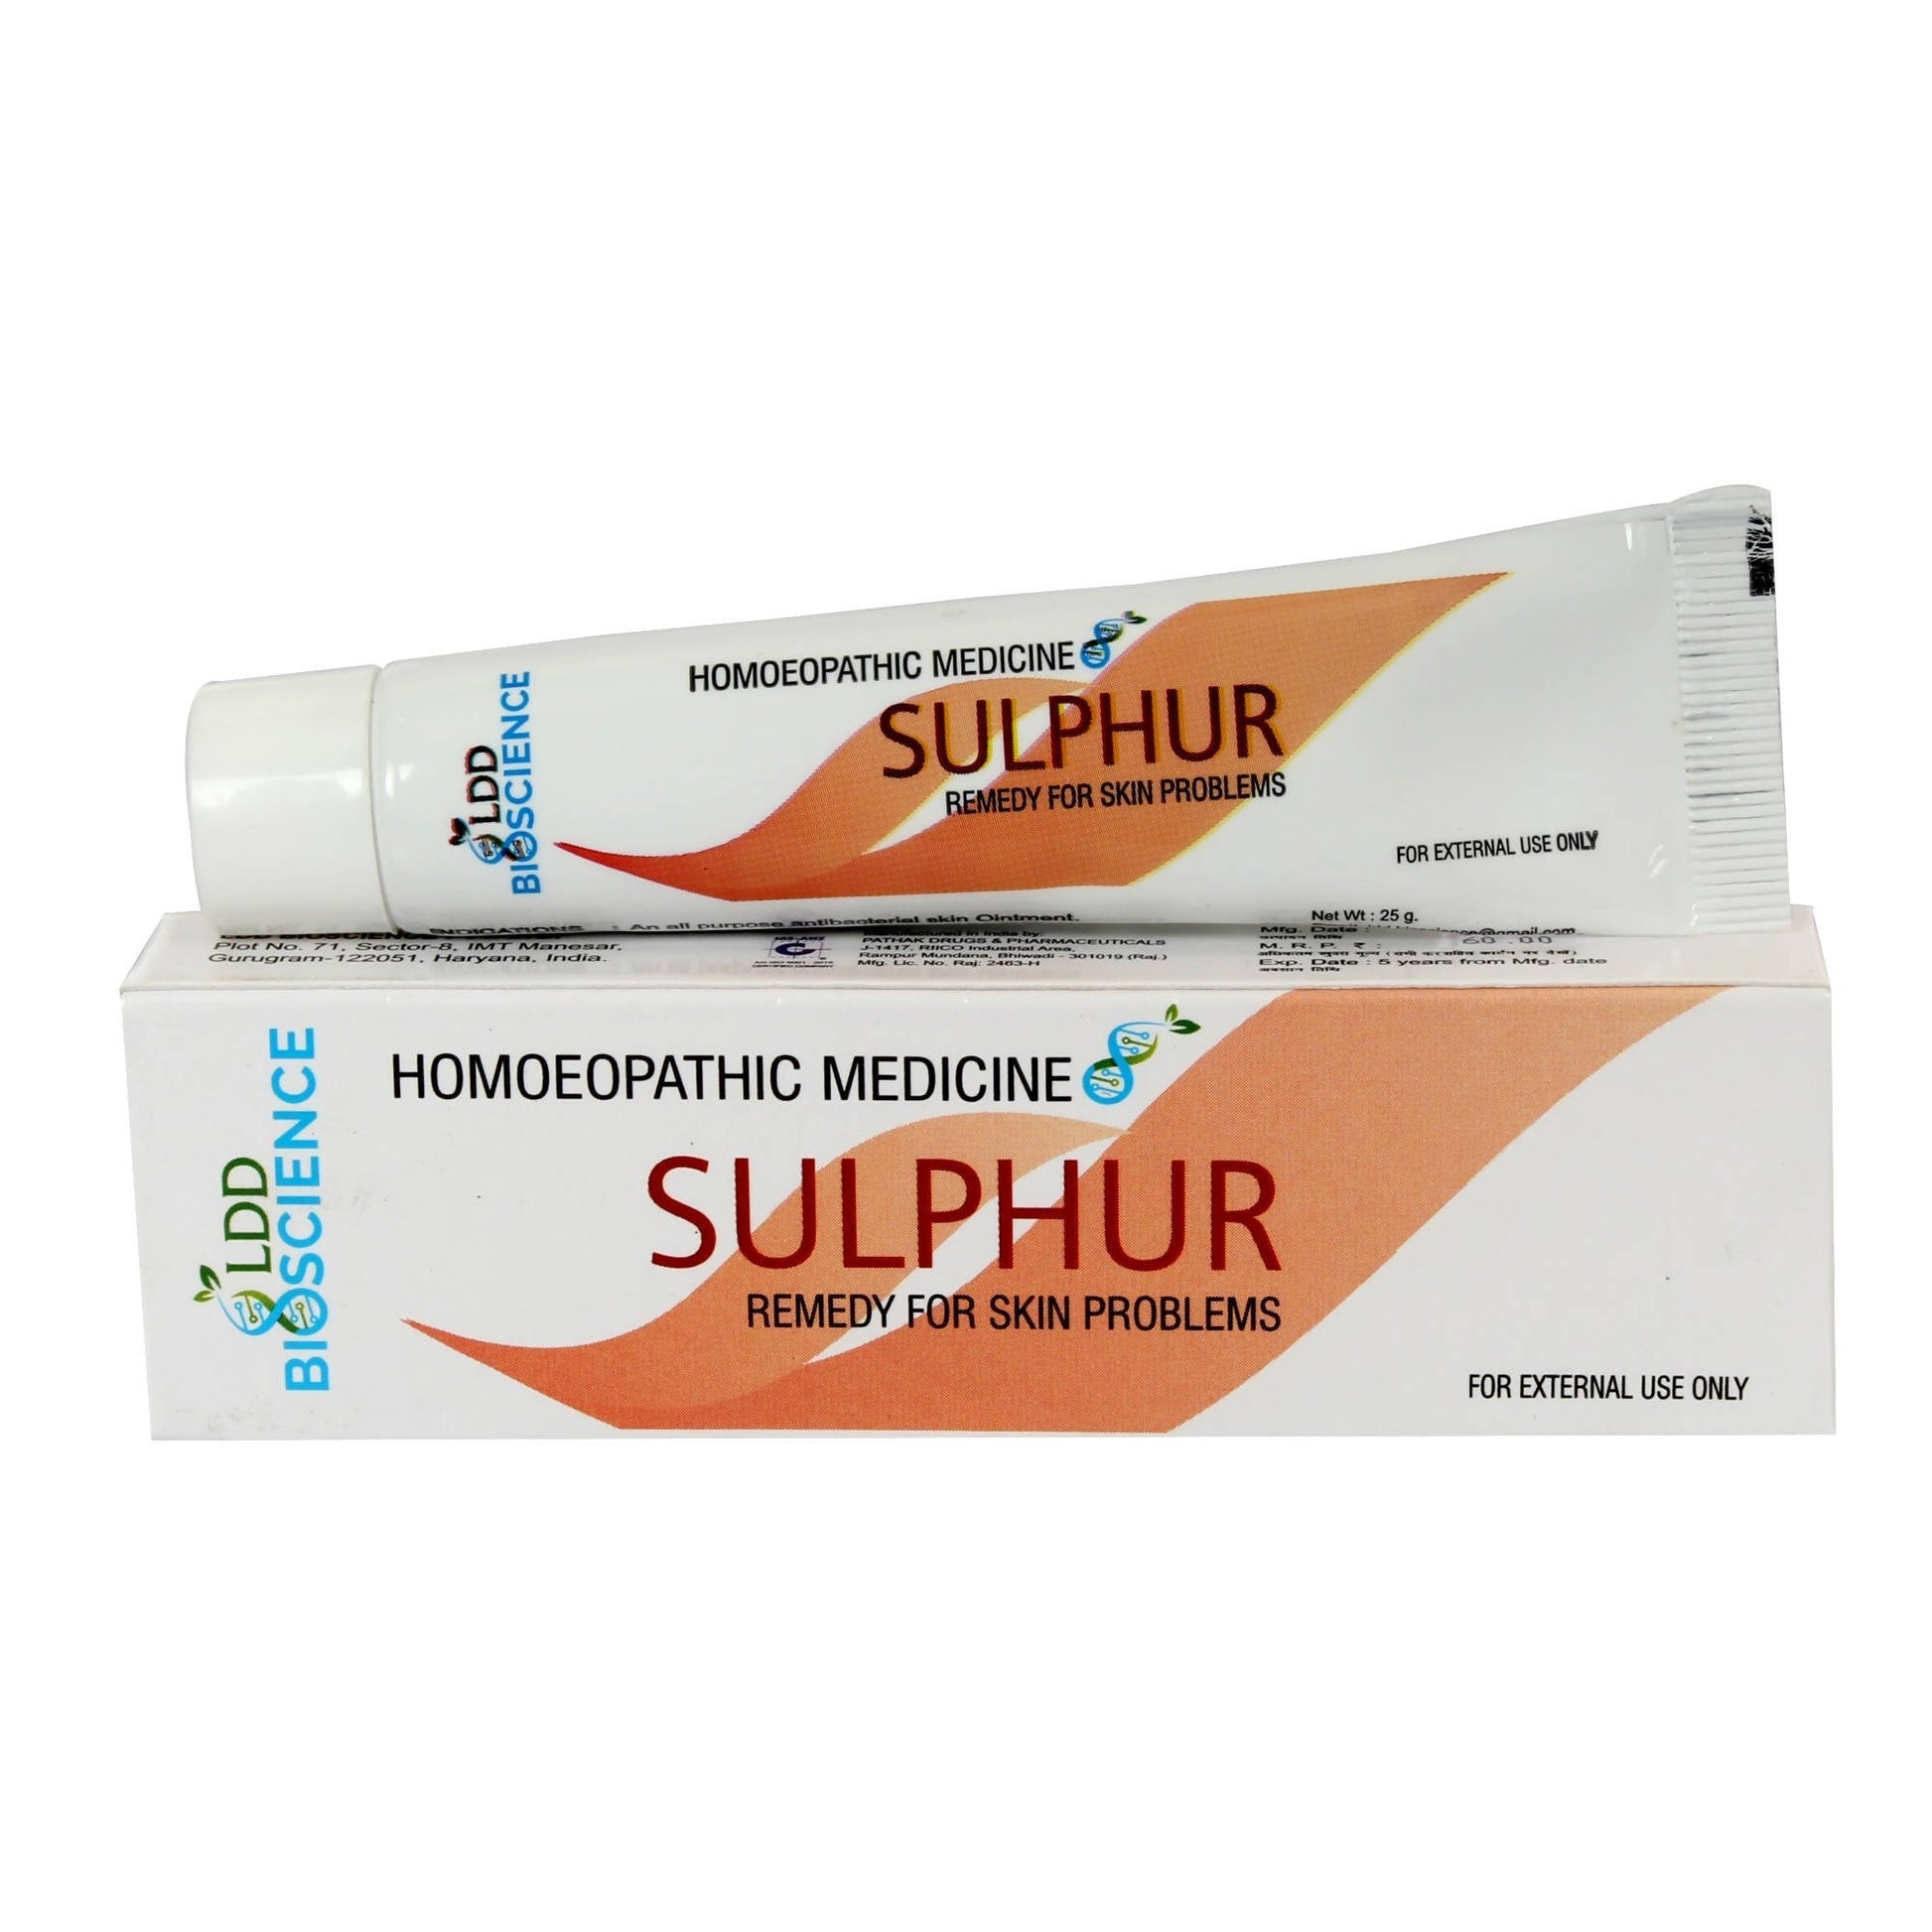 LDD Bioscience Homeopathy Sulphur Ointment